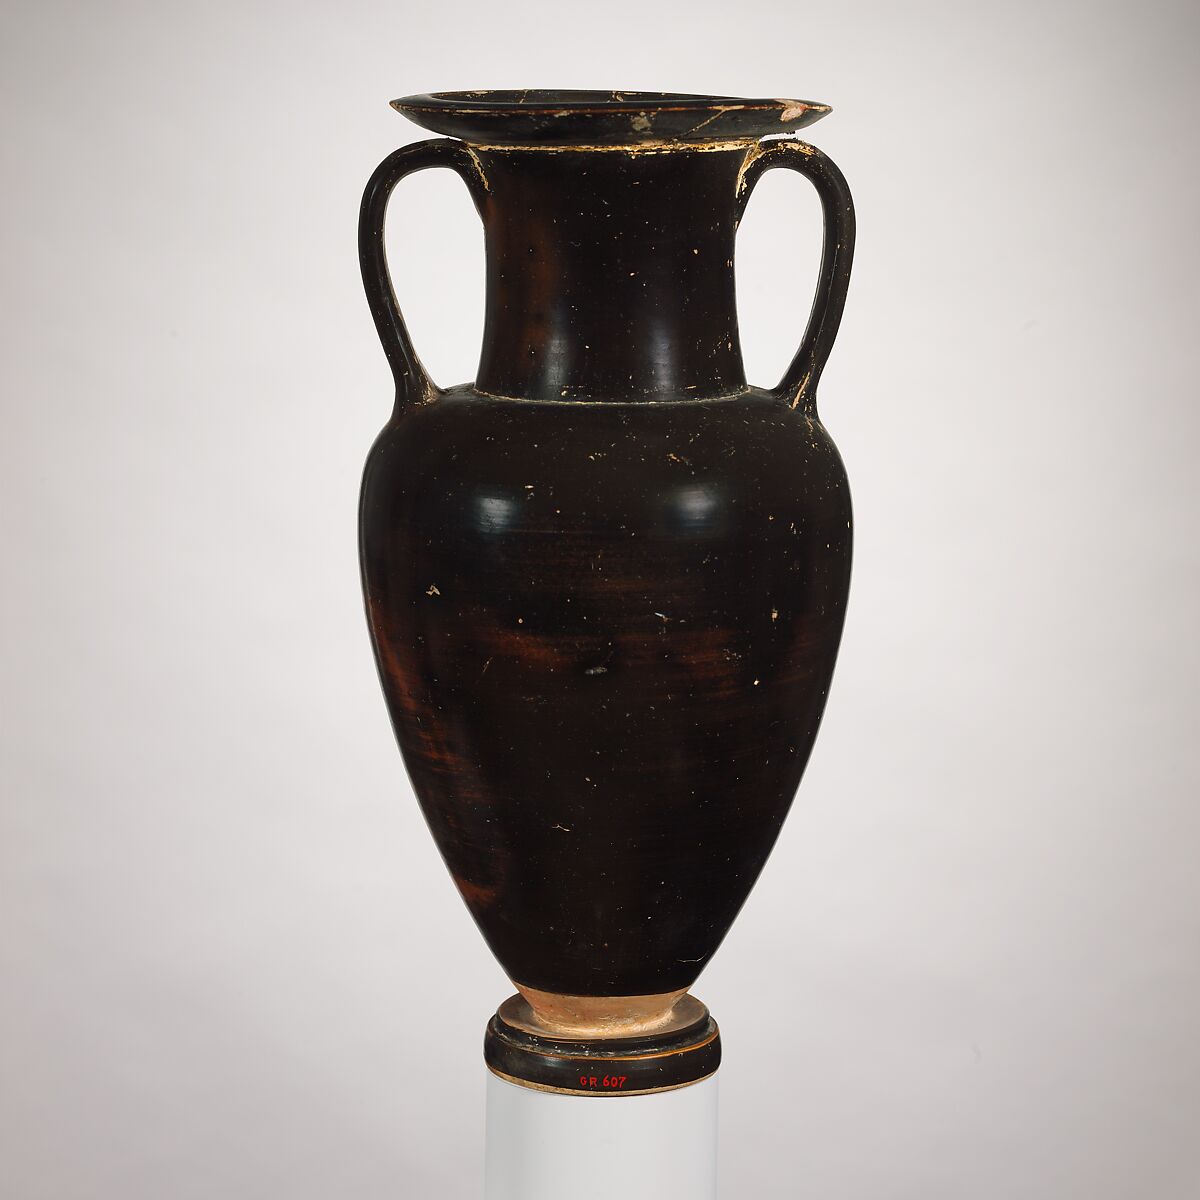 Terracotta neck-amphora (jar), Attributed to the Owl-Pillar Group, Terracotta, Greek, South Italian, Campanian 